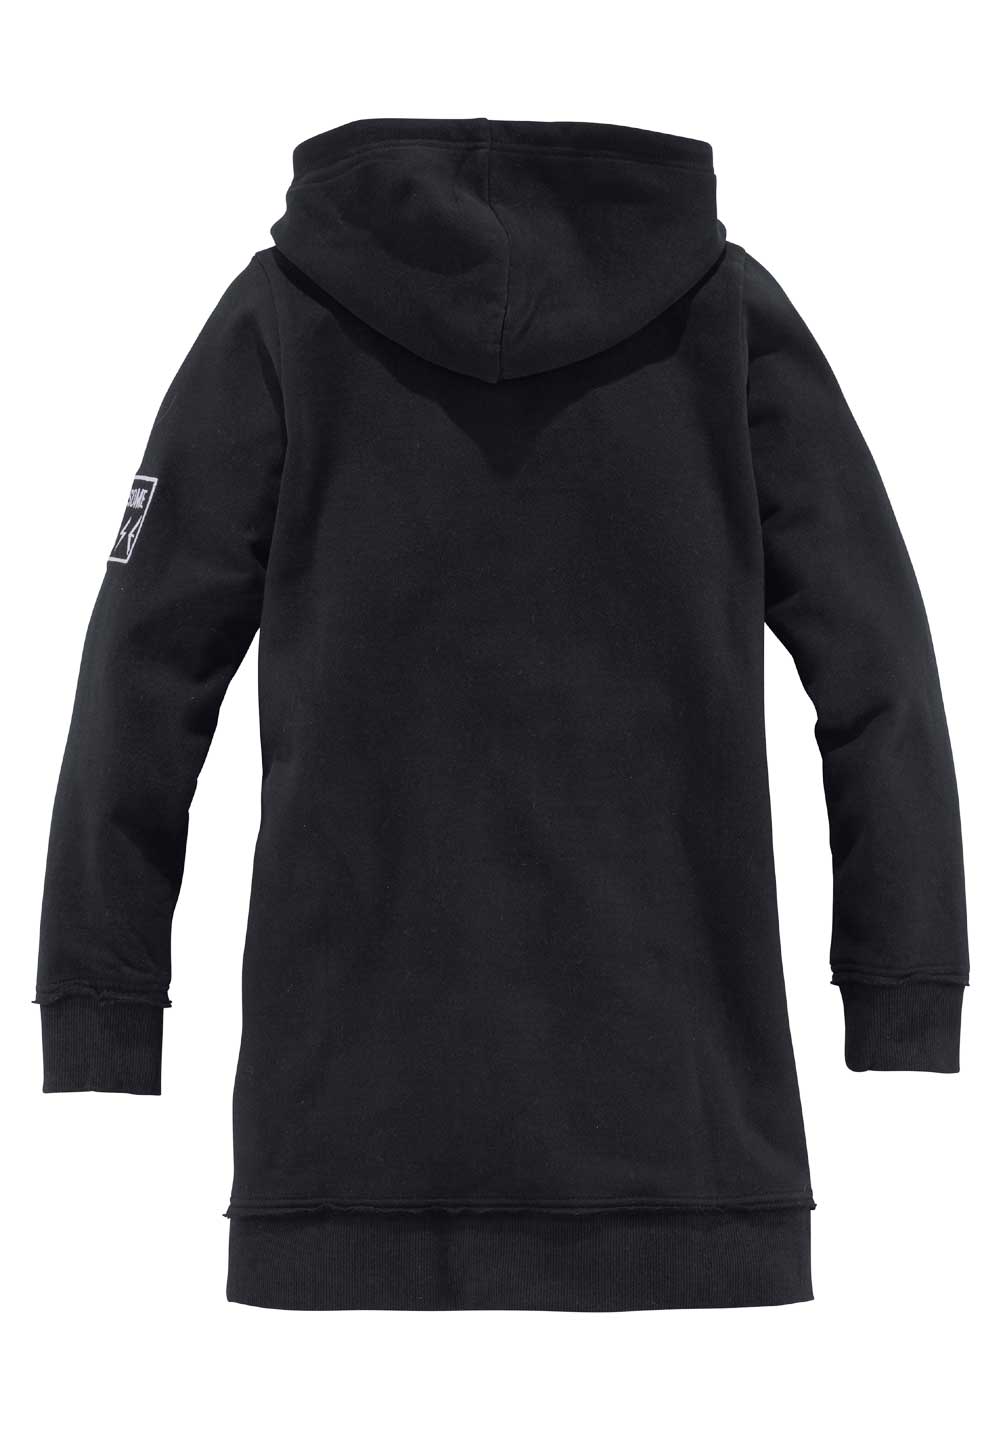 Buffalo Marken-Kinder-Kapuzensweatshirt, schwarz